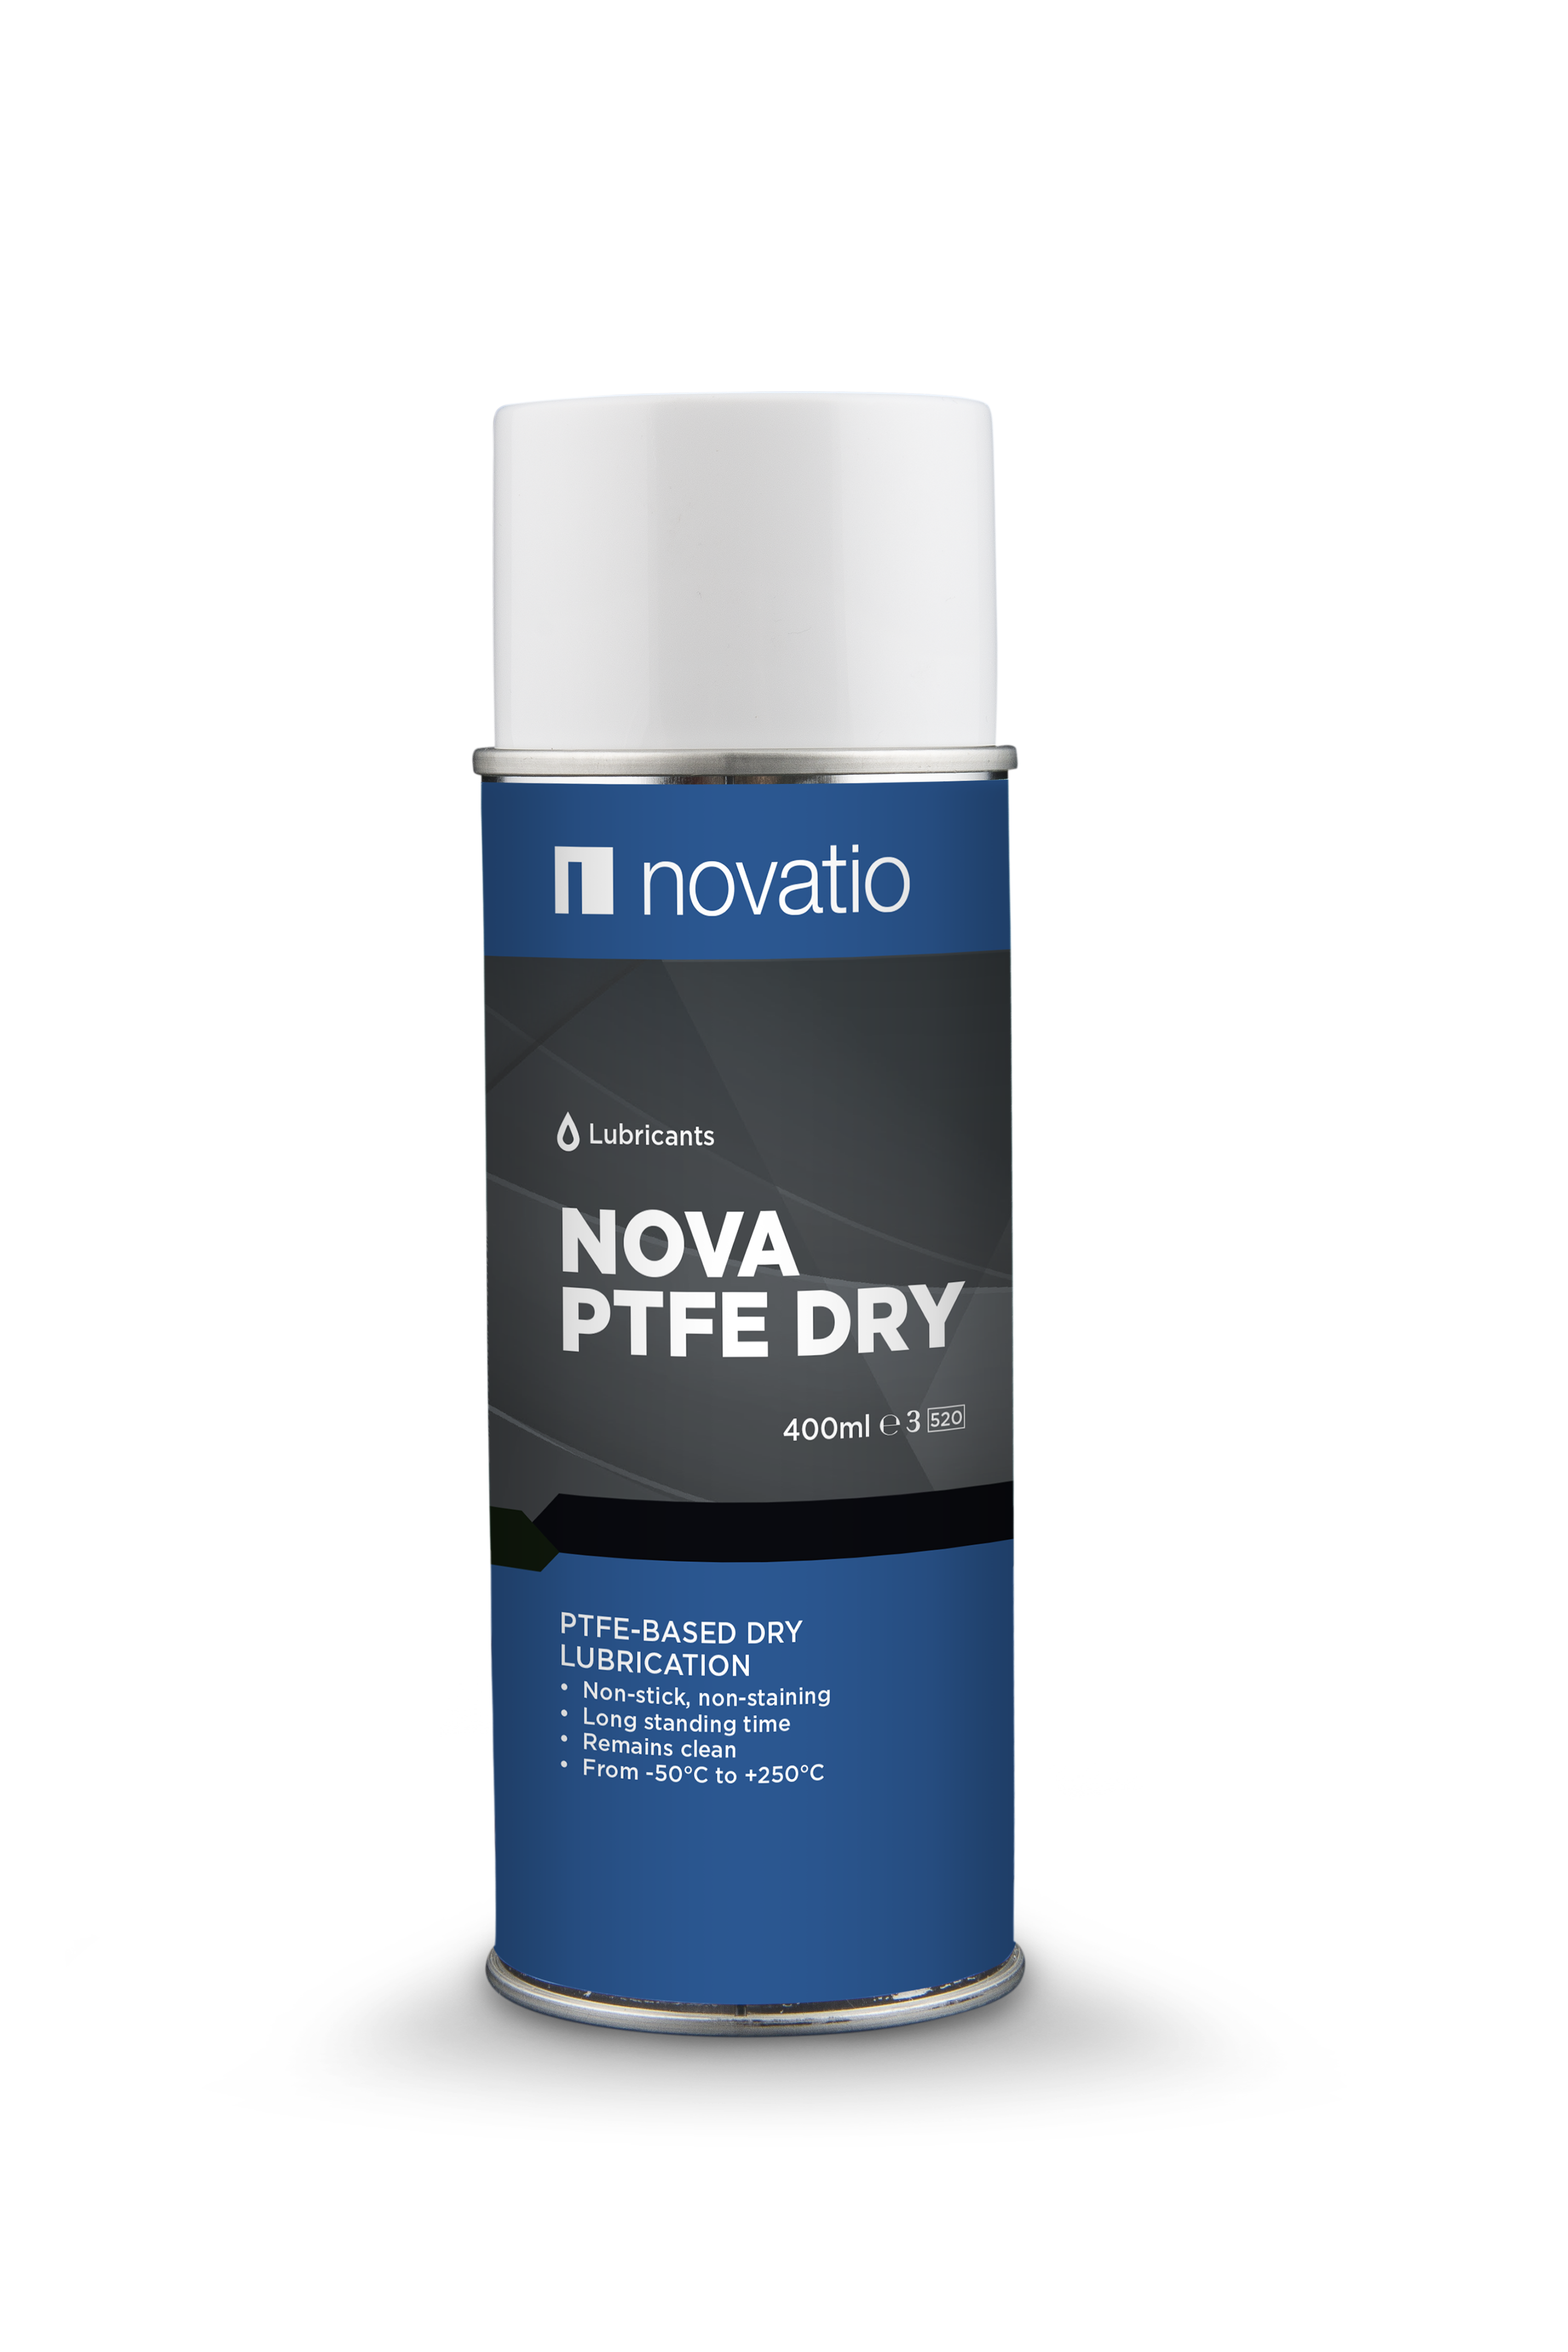 Nova PTFE Dry